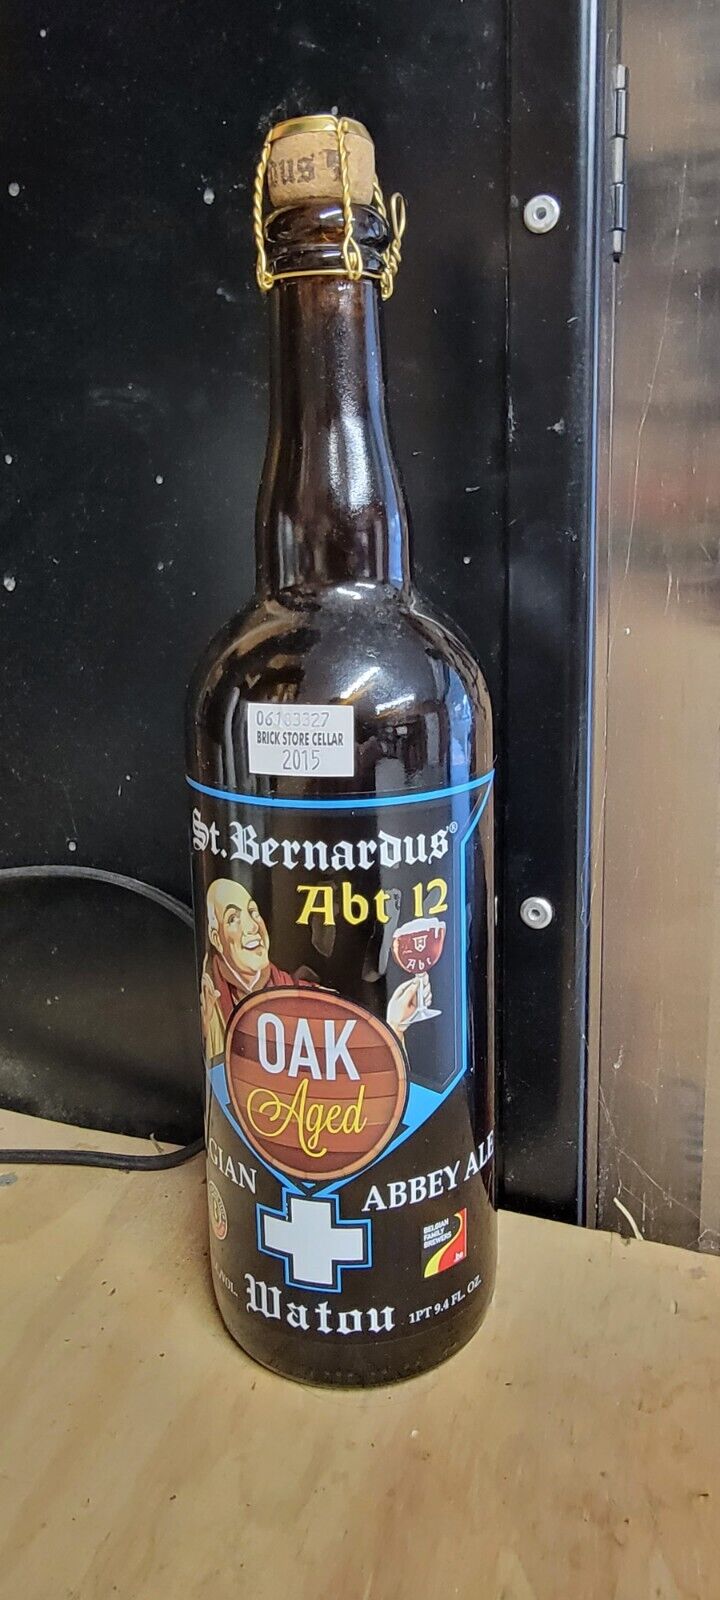 st bernardus oak aged abt 12 beer Bottle